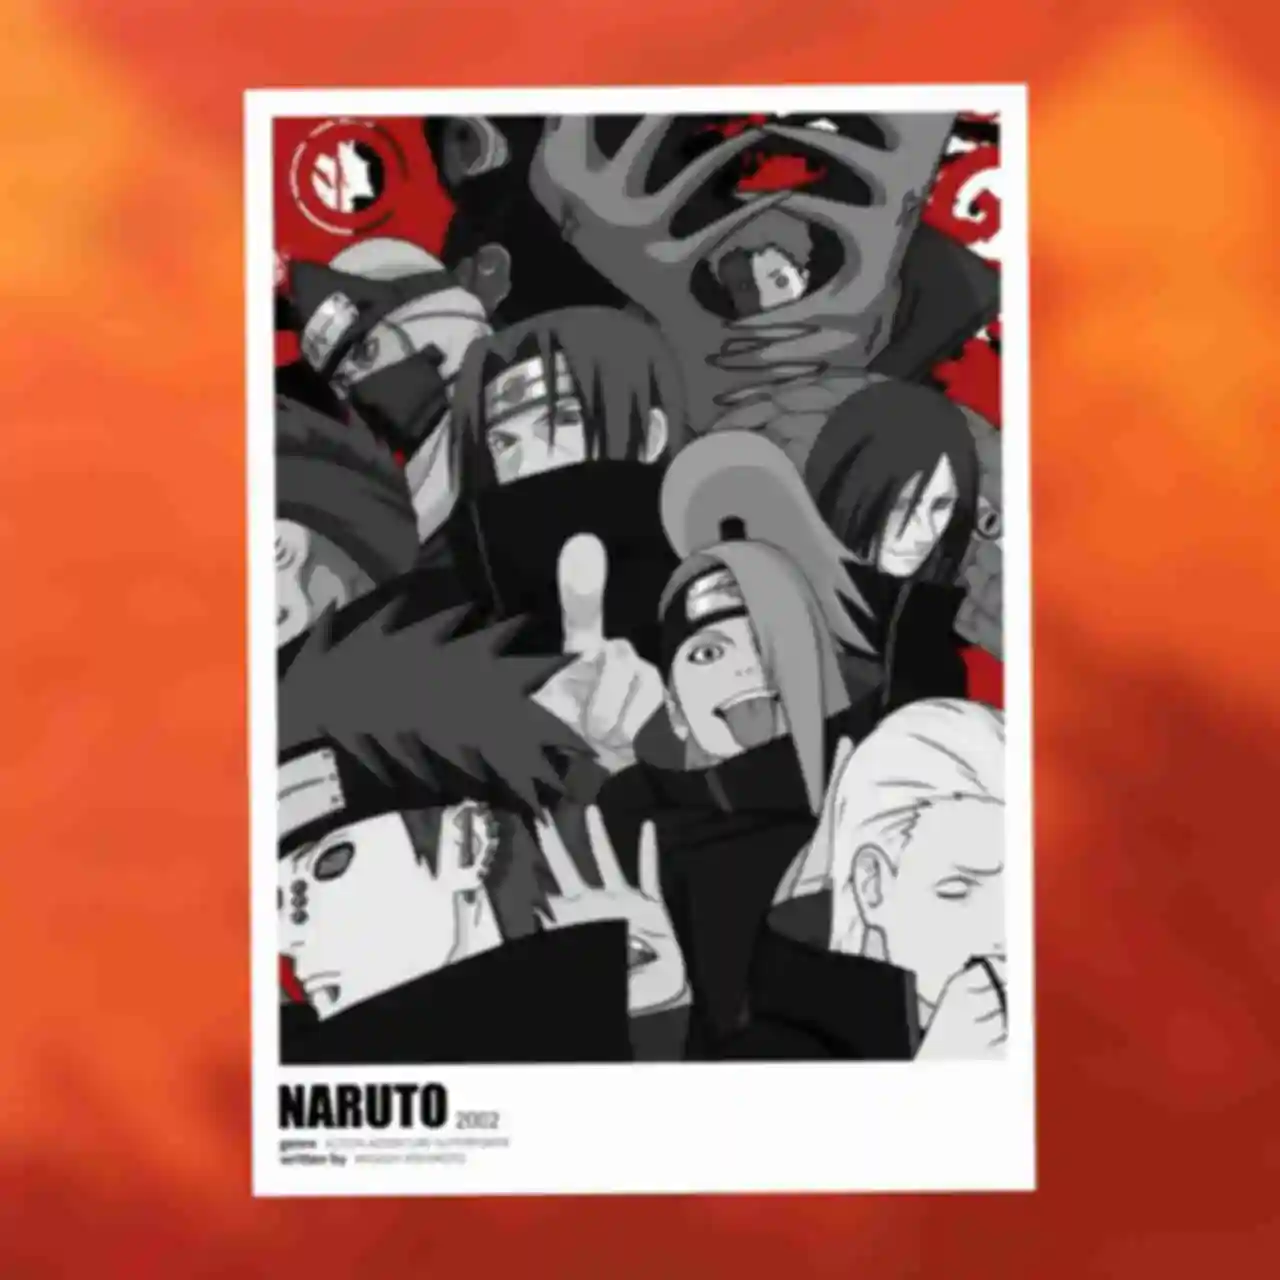 Постер №1 ⦁ Чёрно-белый арт Акацуки ⦁ Плакат Akatsuki ⦁ Сувениры Наруто ⦁ Подарки в стиле аниме Naruto